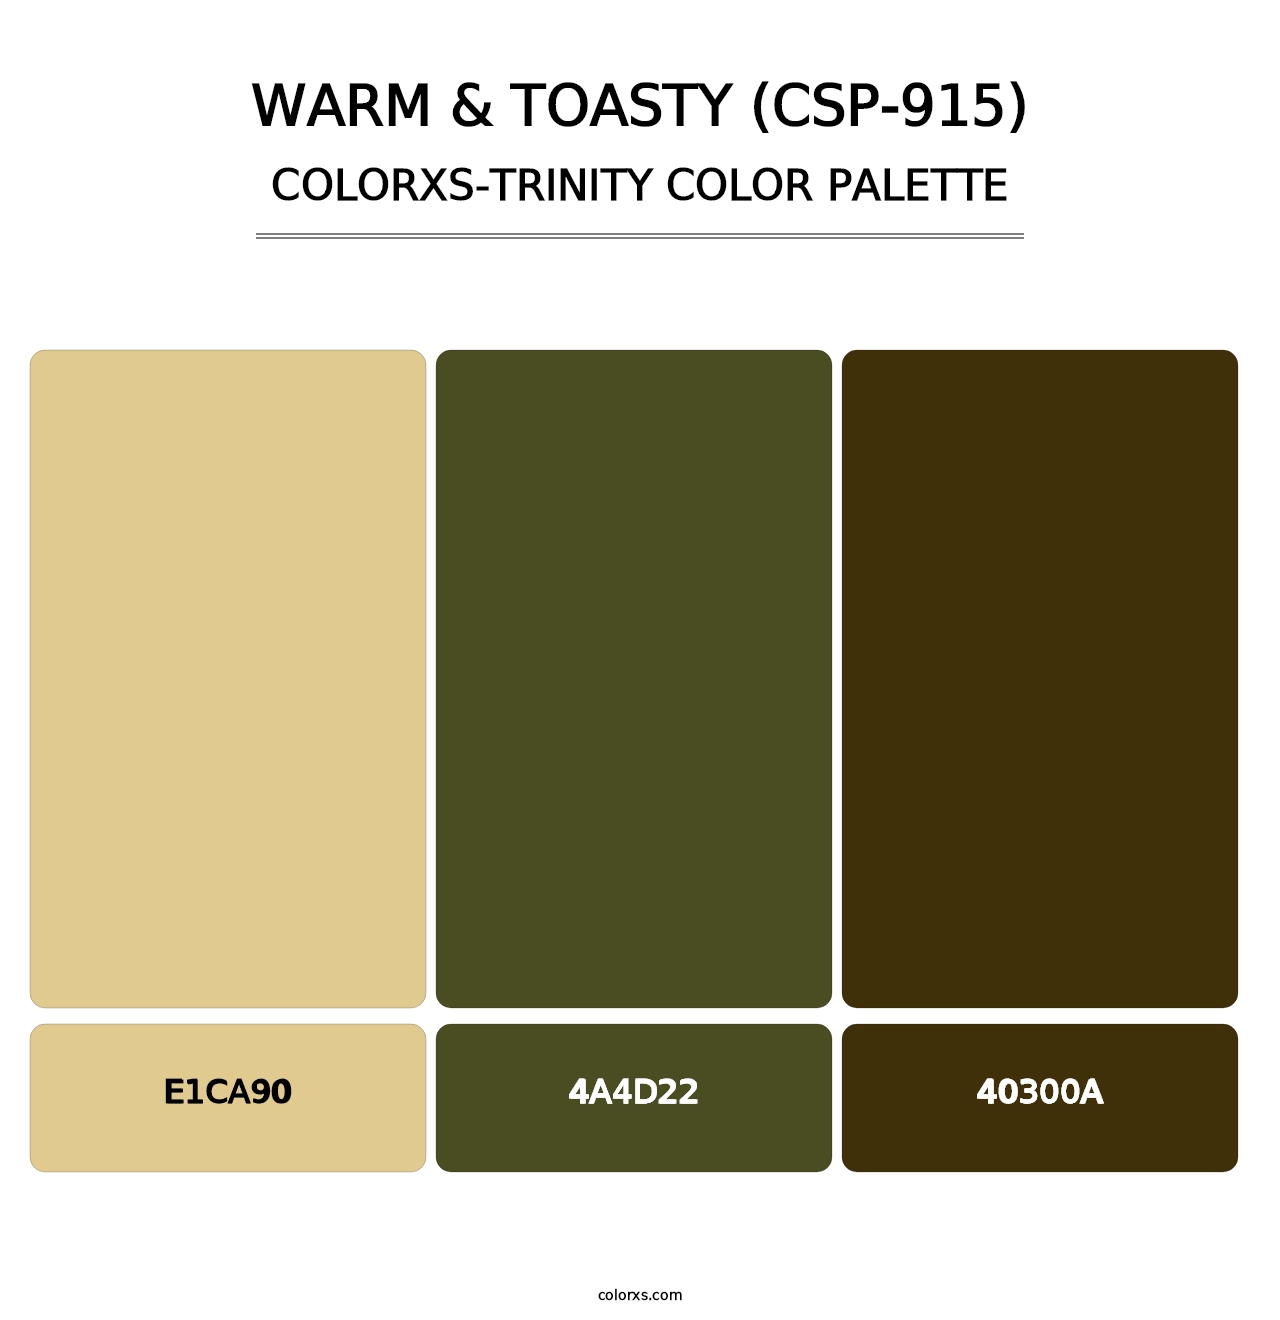 Warm & Toasty (CSP-915) - Colorxs Trinity Palette